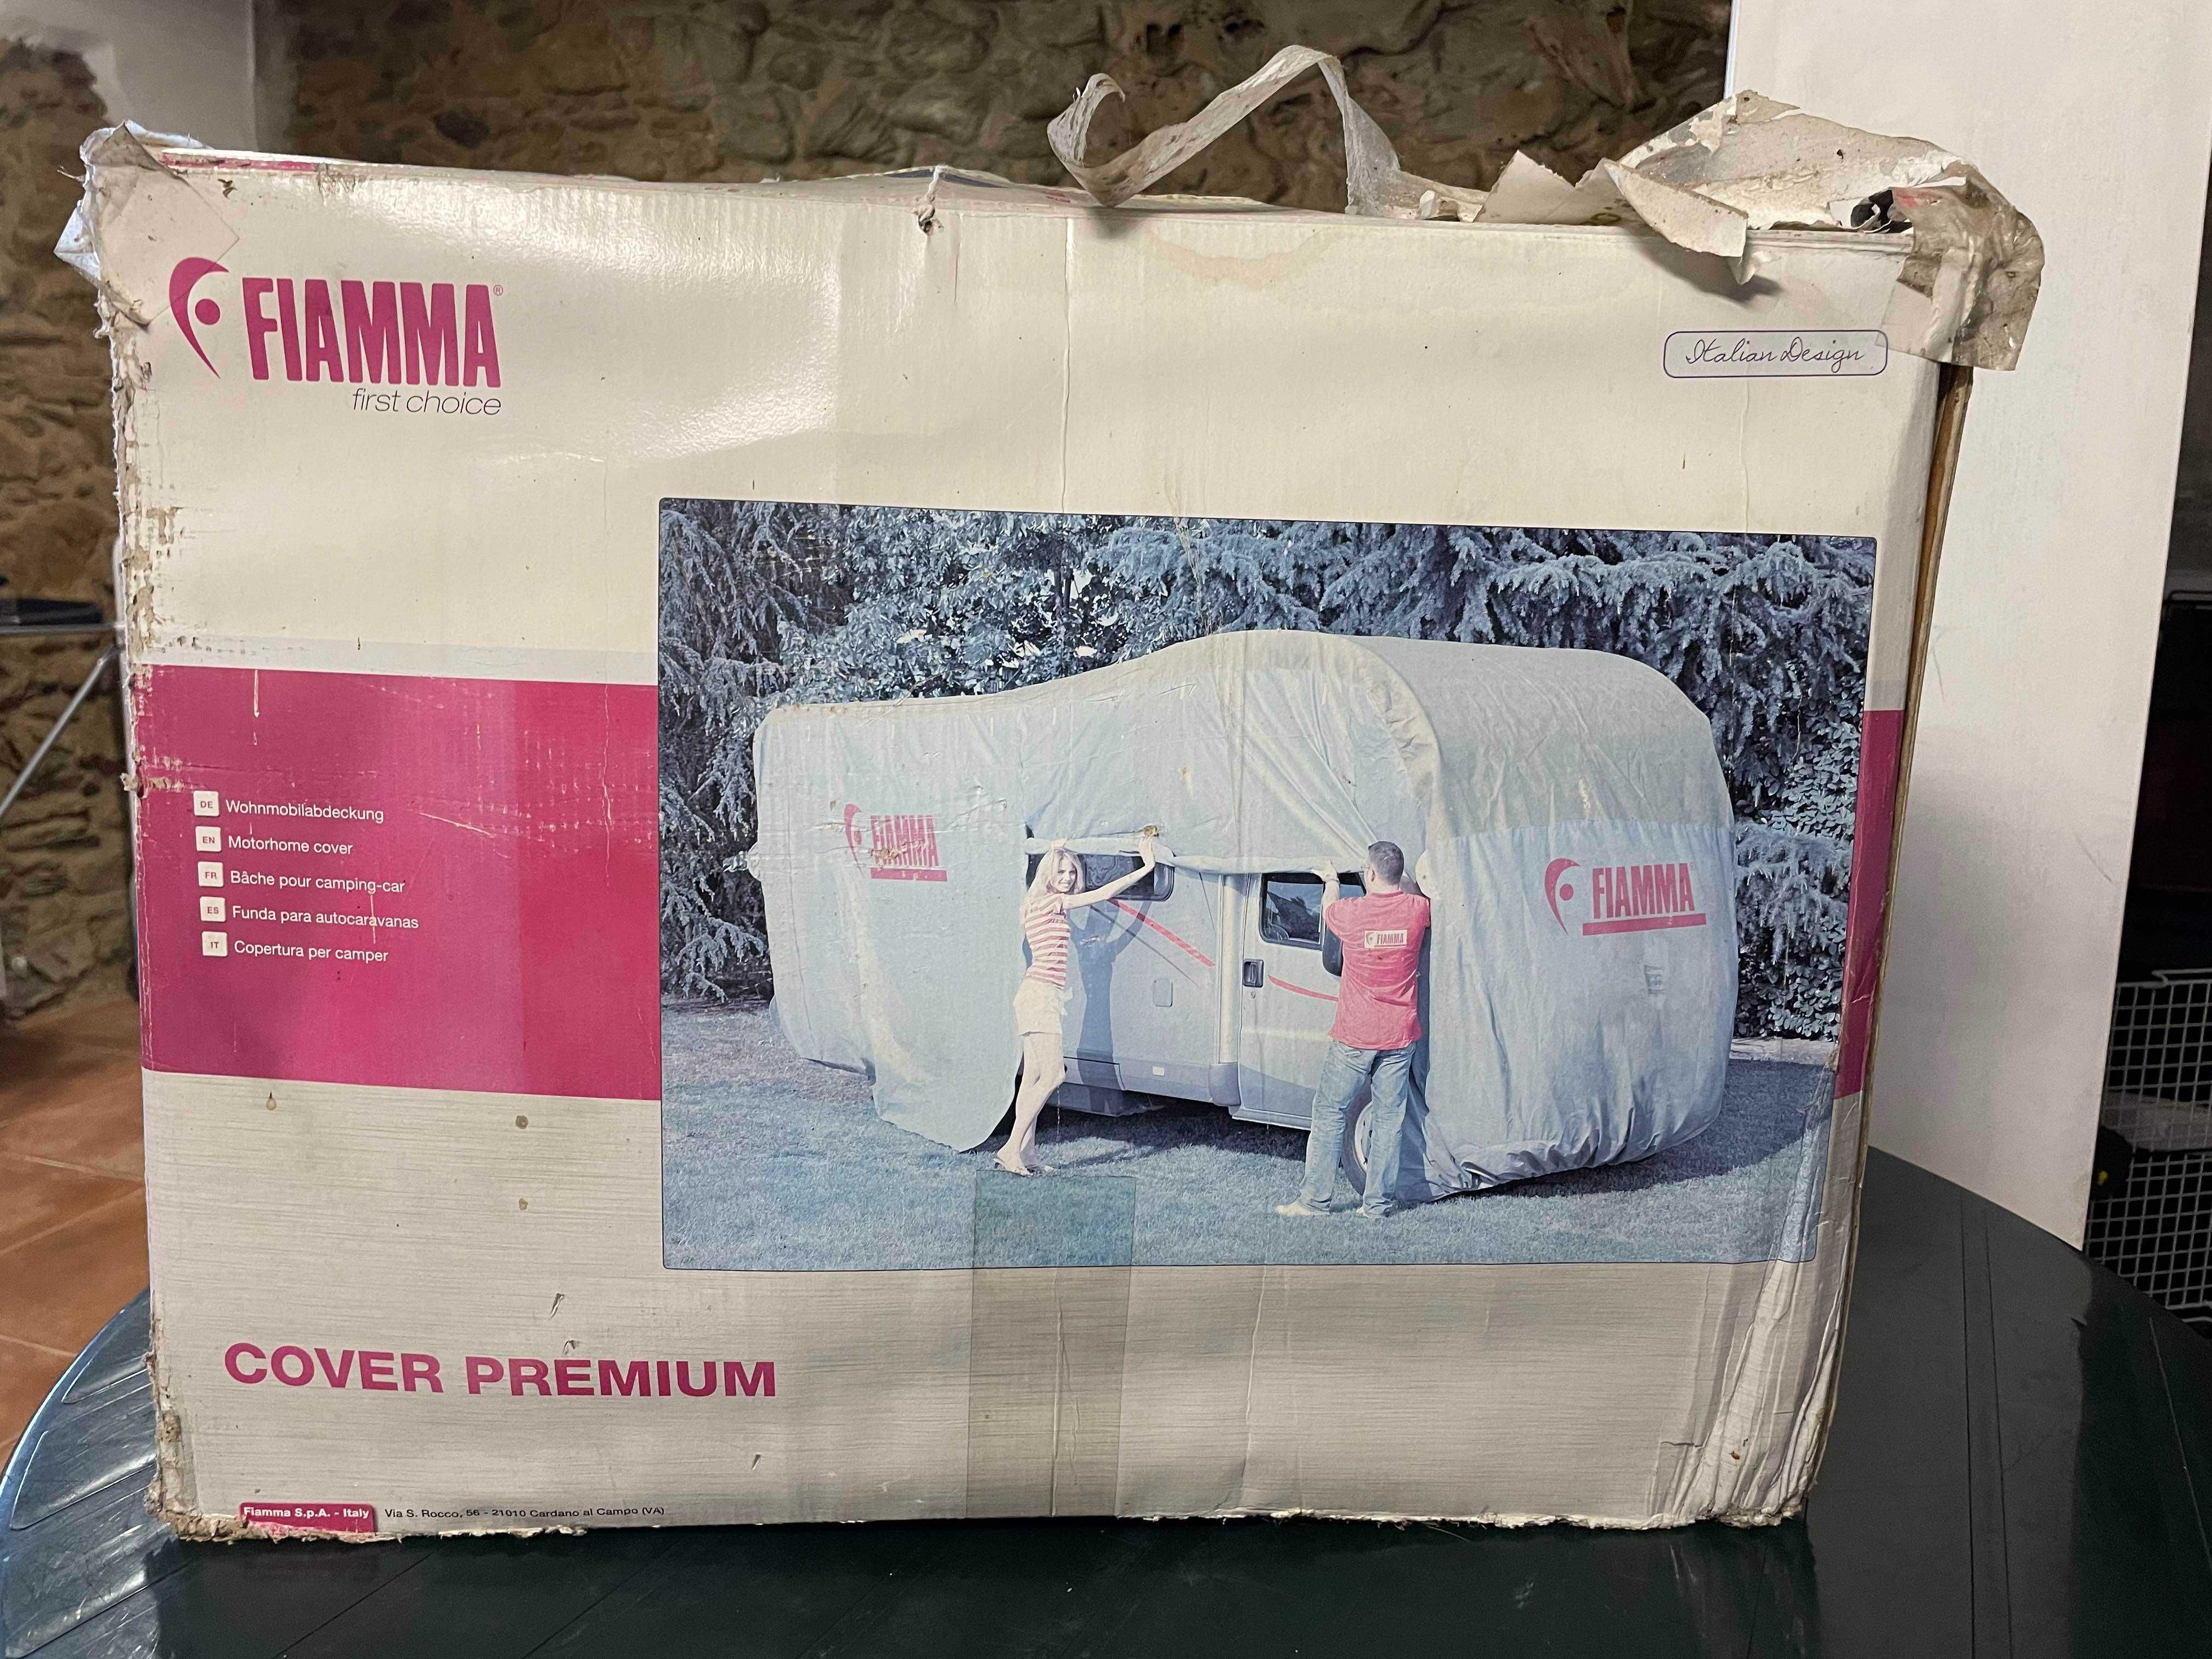 Cobertura para autocaravana até 7,1 metros, Fiamma Premium (M)